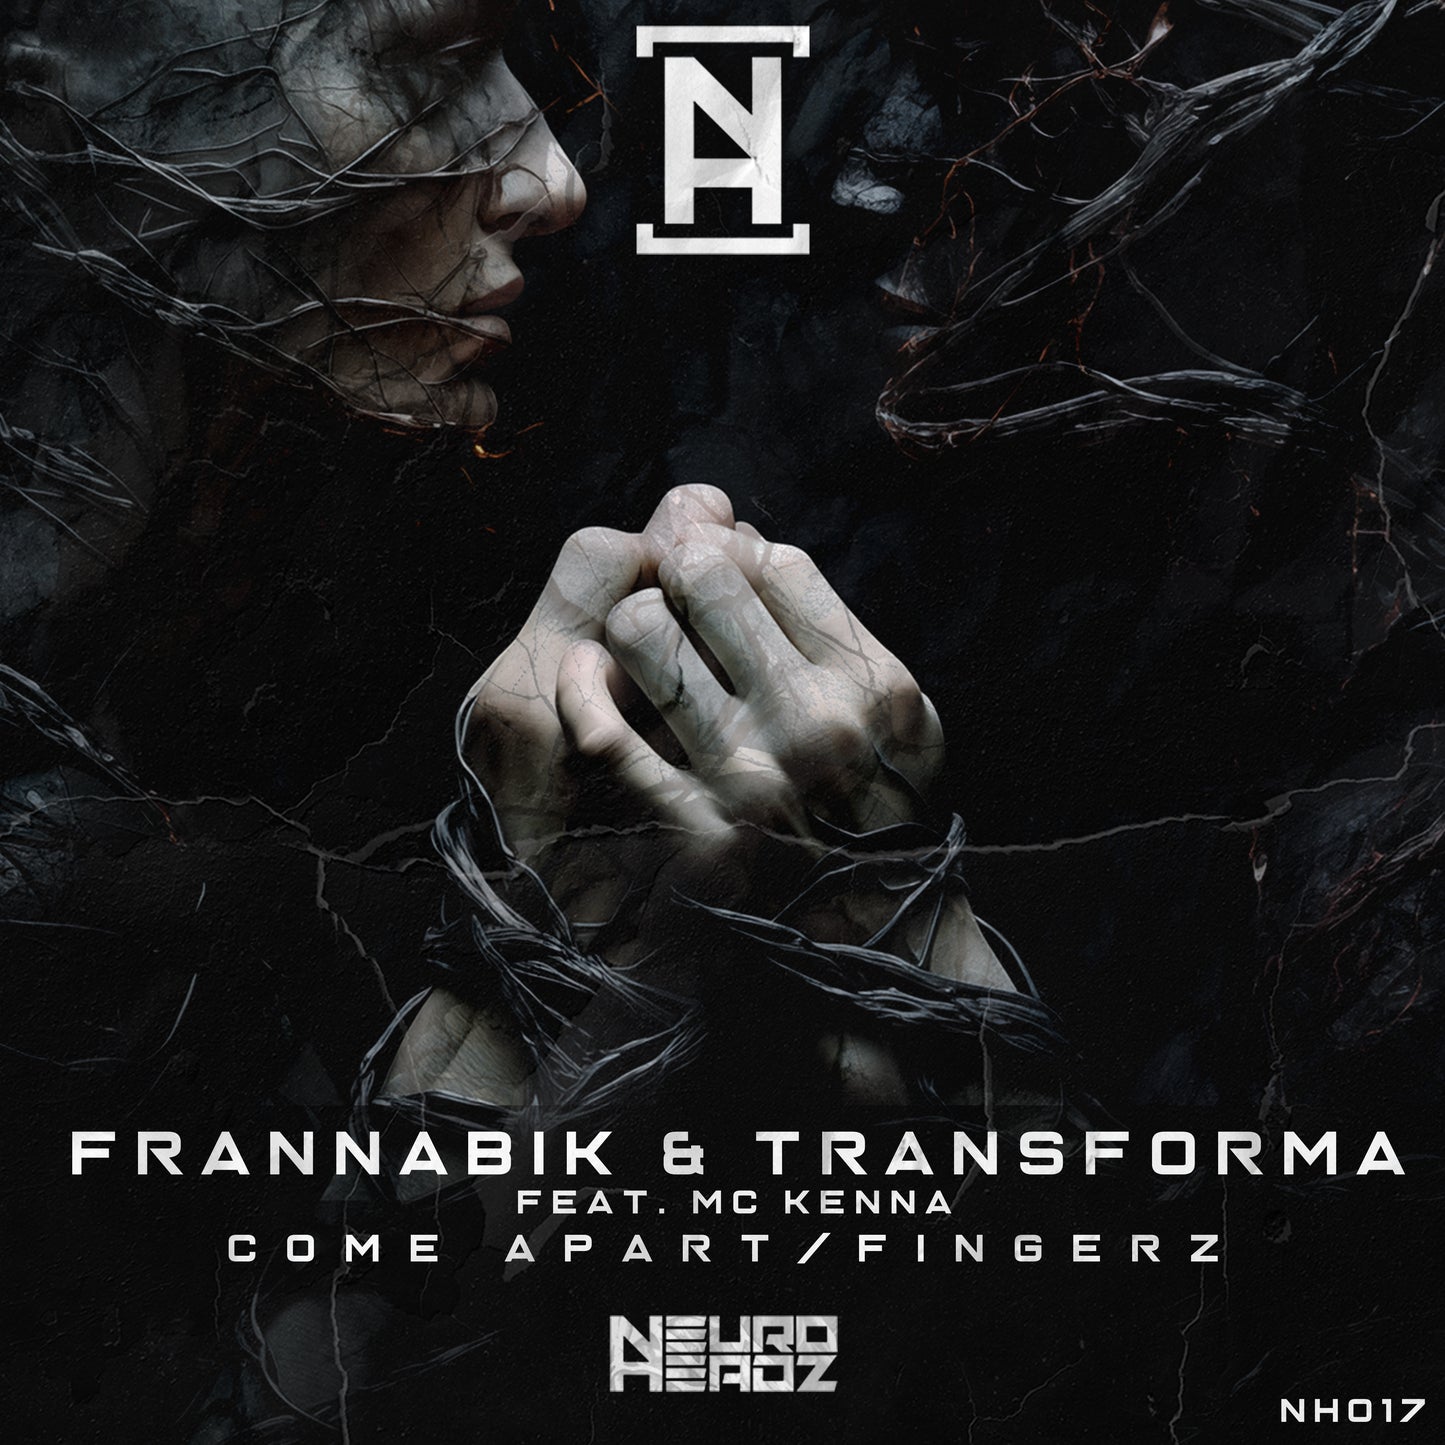 Frannabik & Transforma Feat. MC Kenna - Come Apart/Fingerz